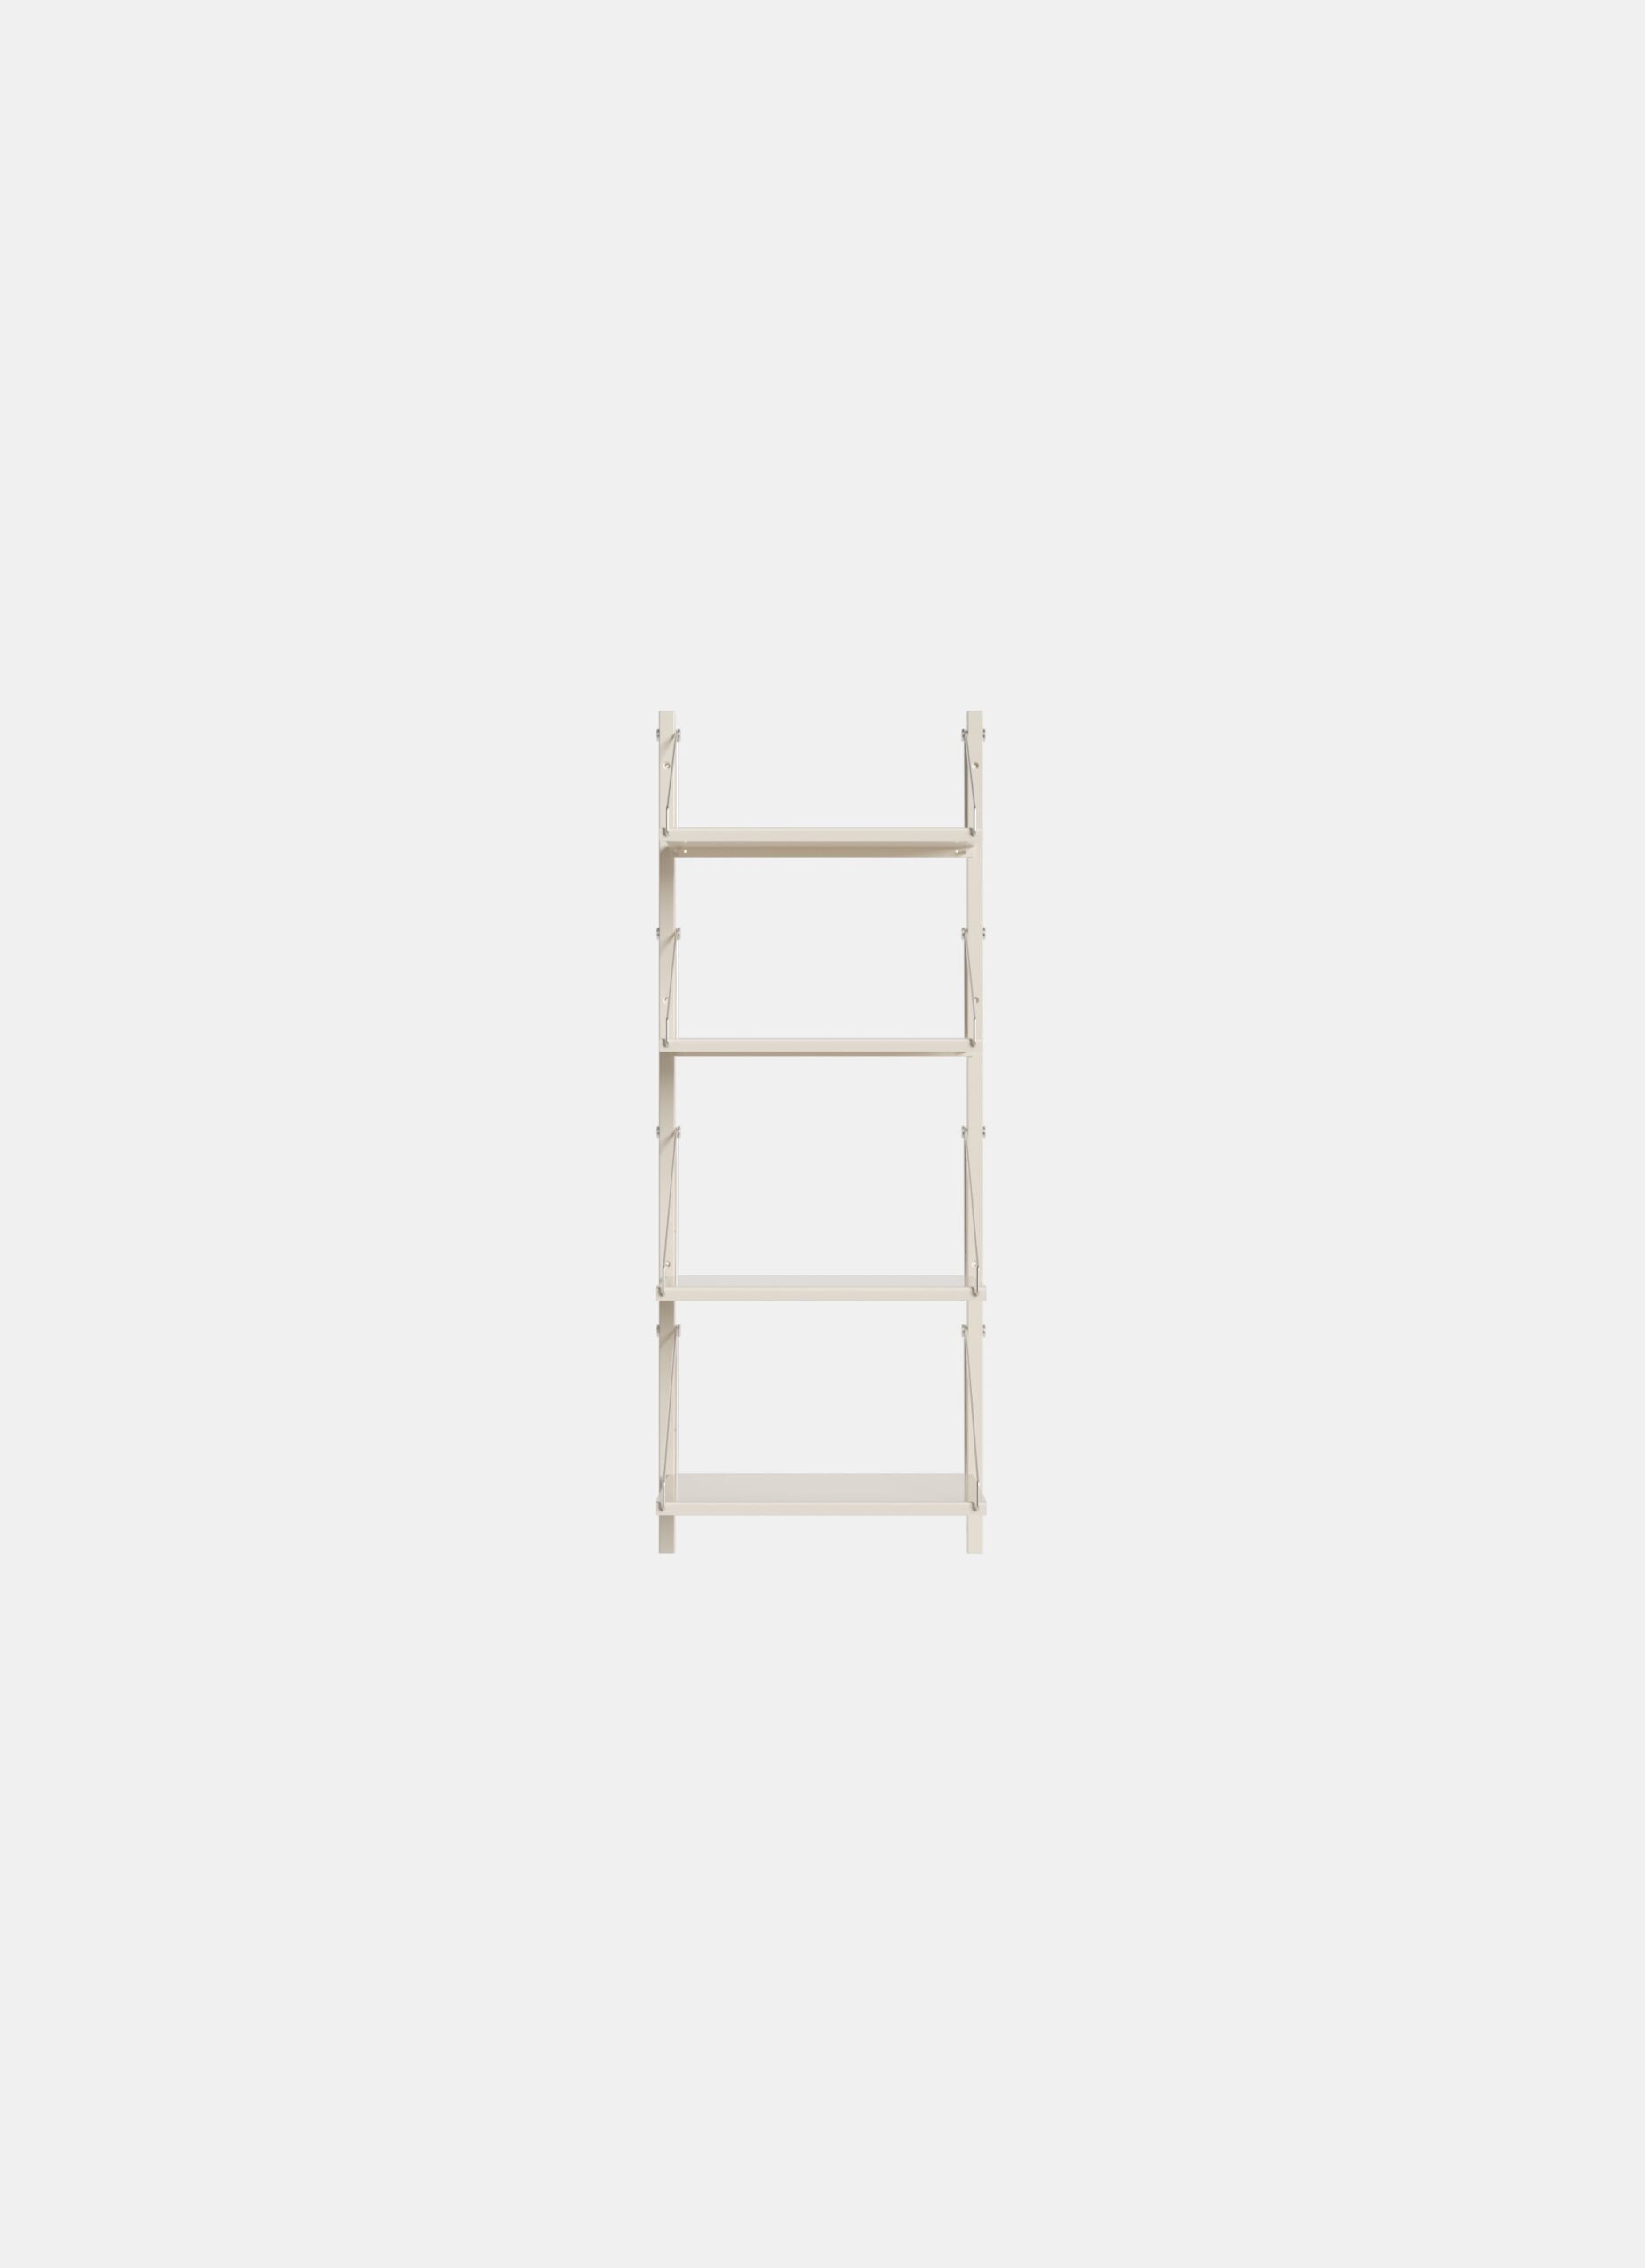 Frama - Shelf Library - Warm White Steel - H1084/W40 - Single Section